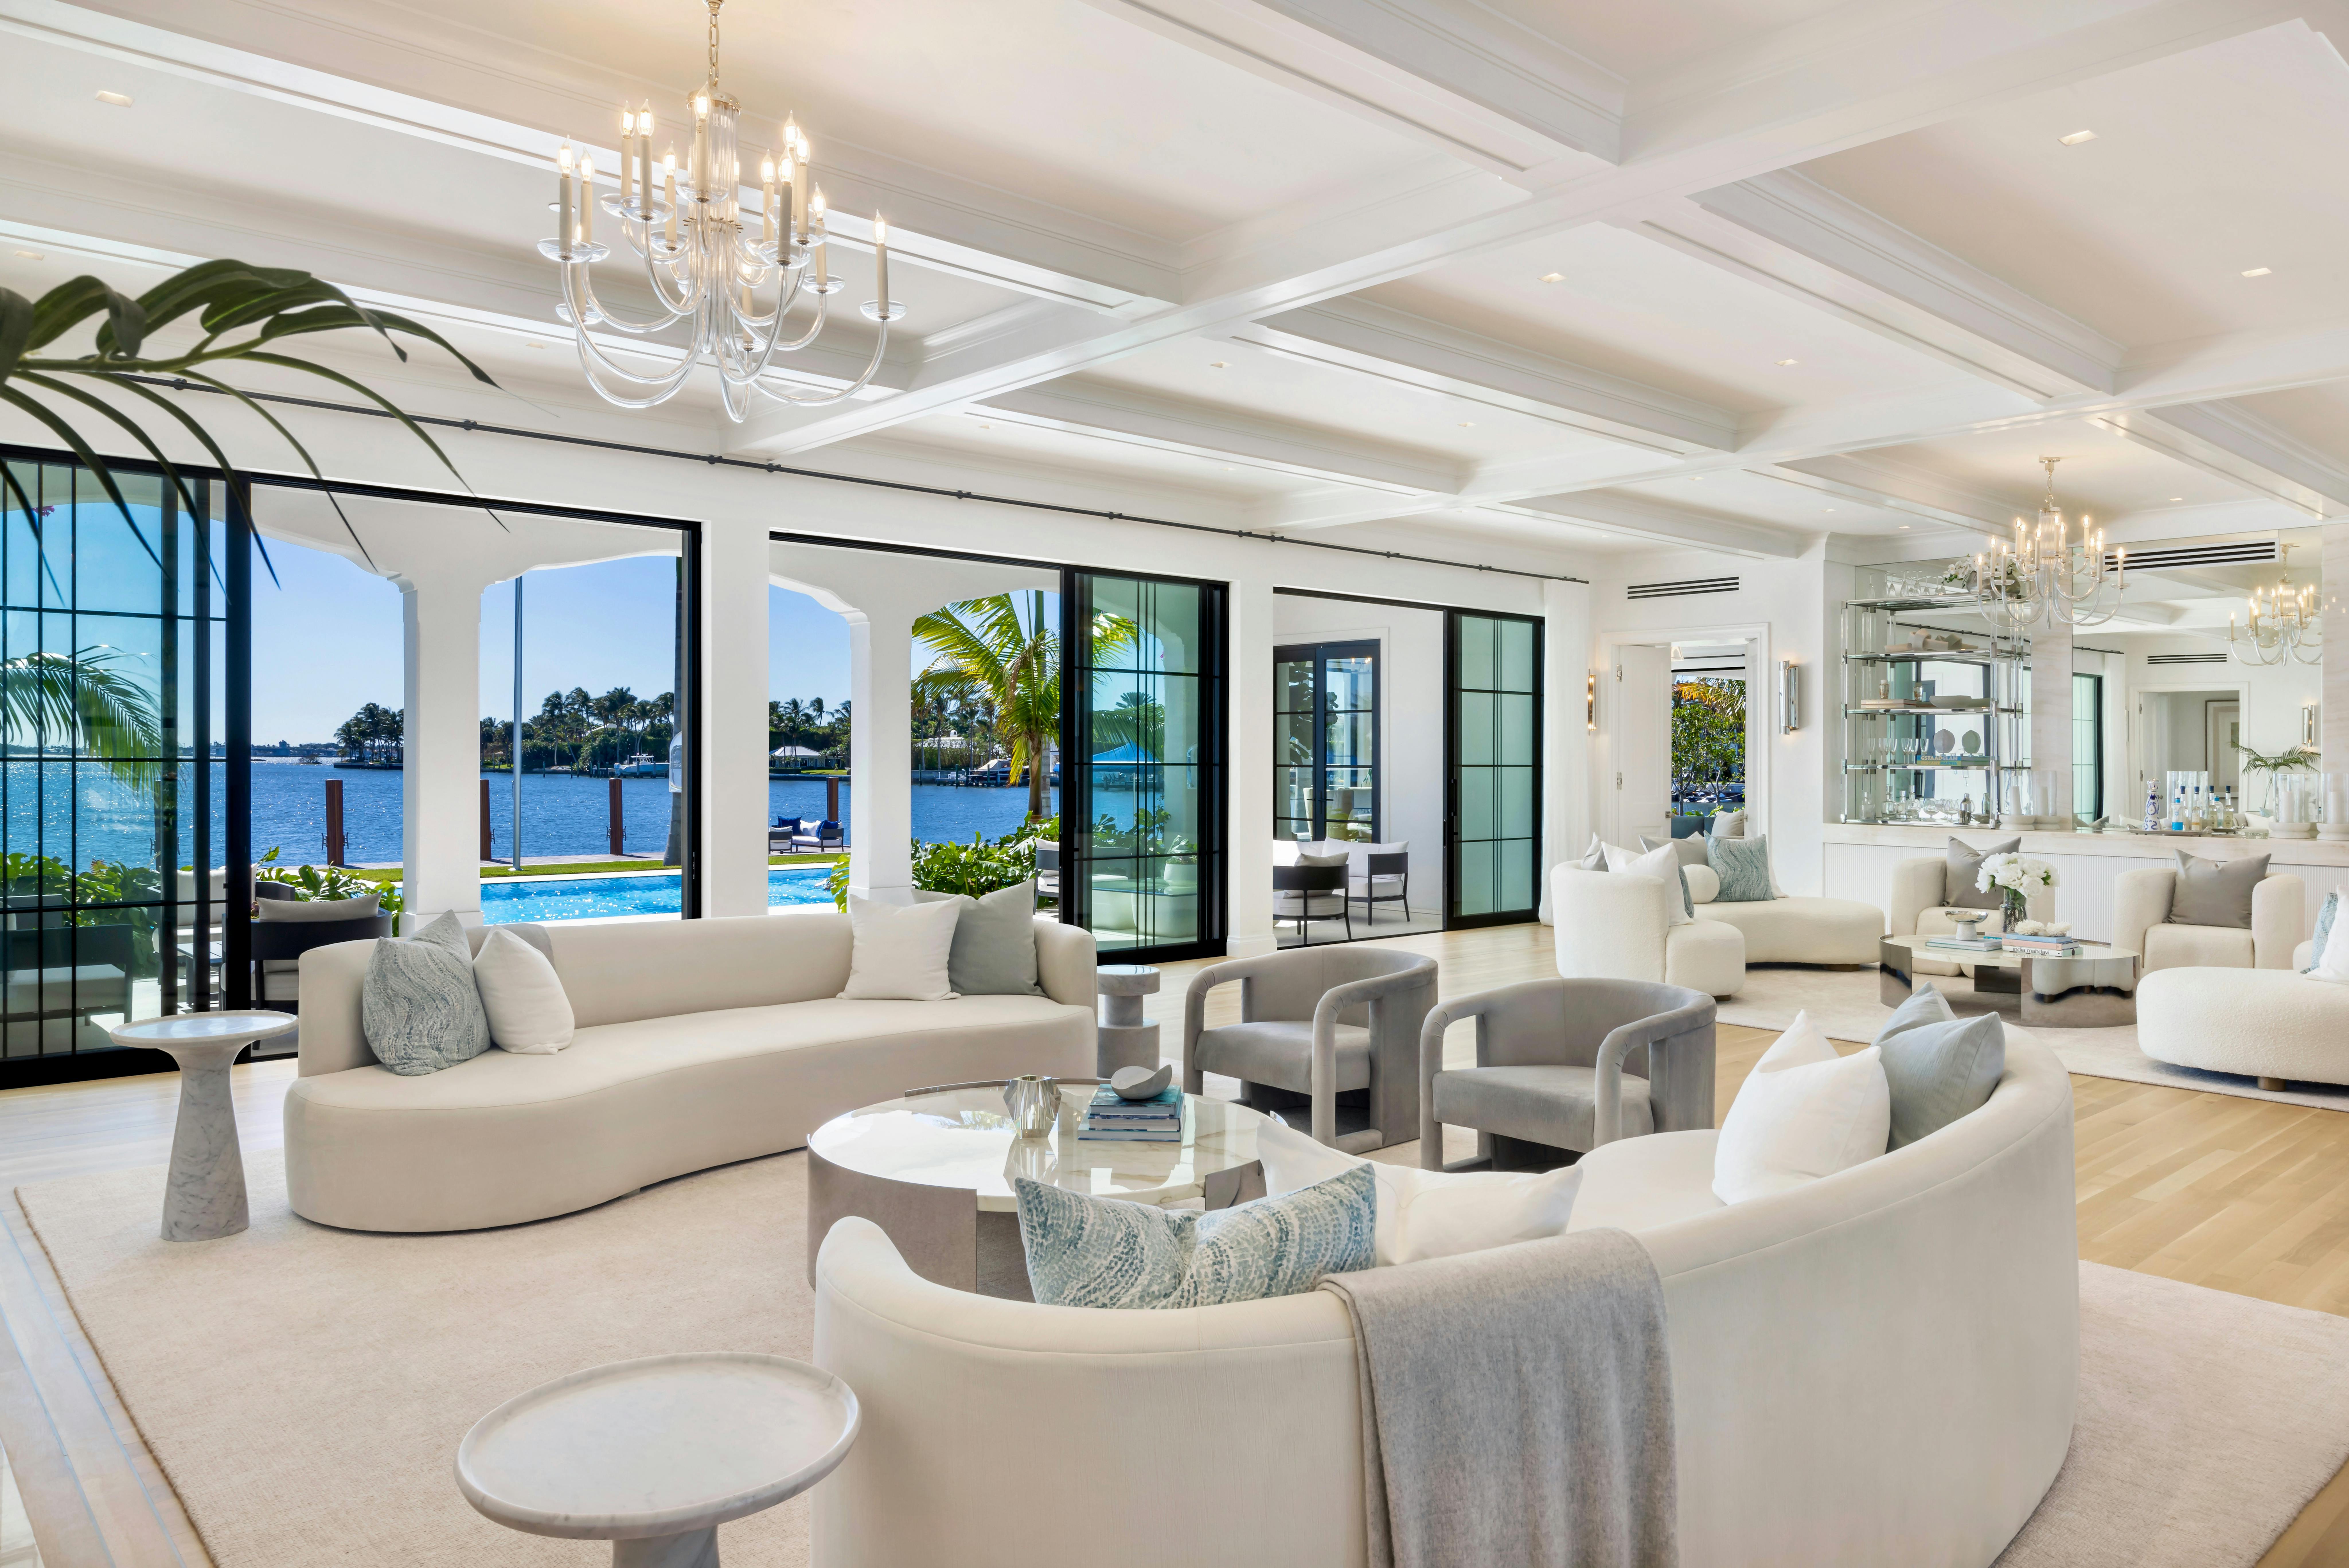  Meridith-Baer-Home-Home-Staging-Florida-Tarpon-Isle-Estates-Transitional-Sitting-Room